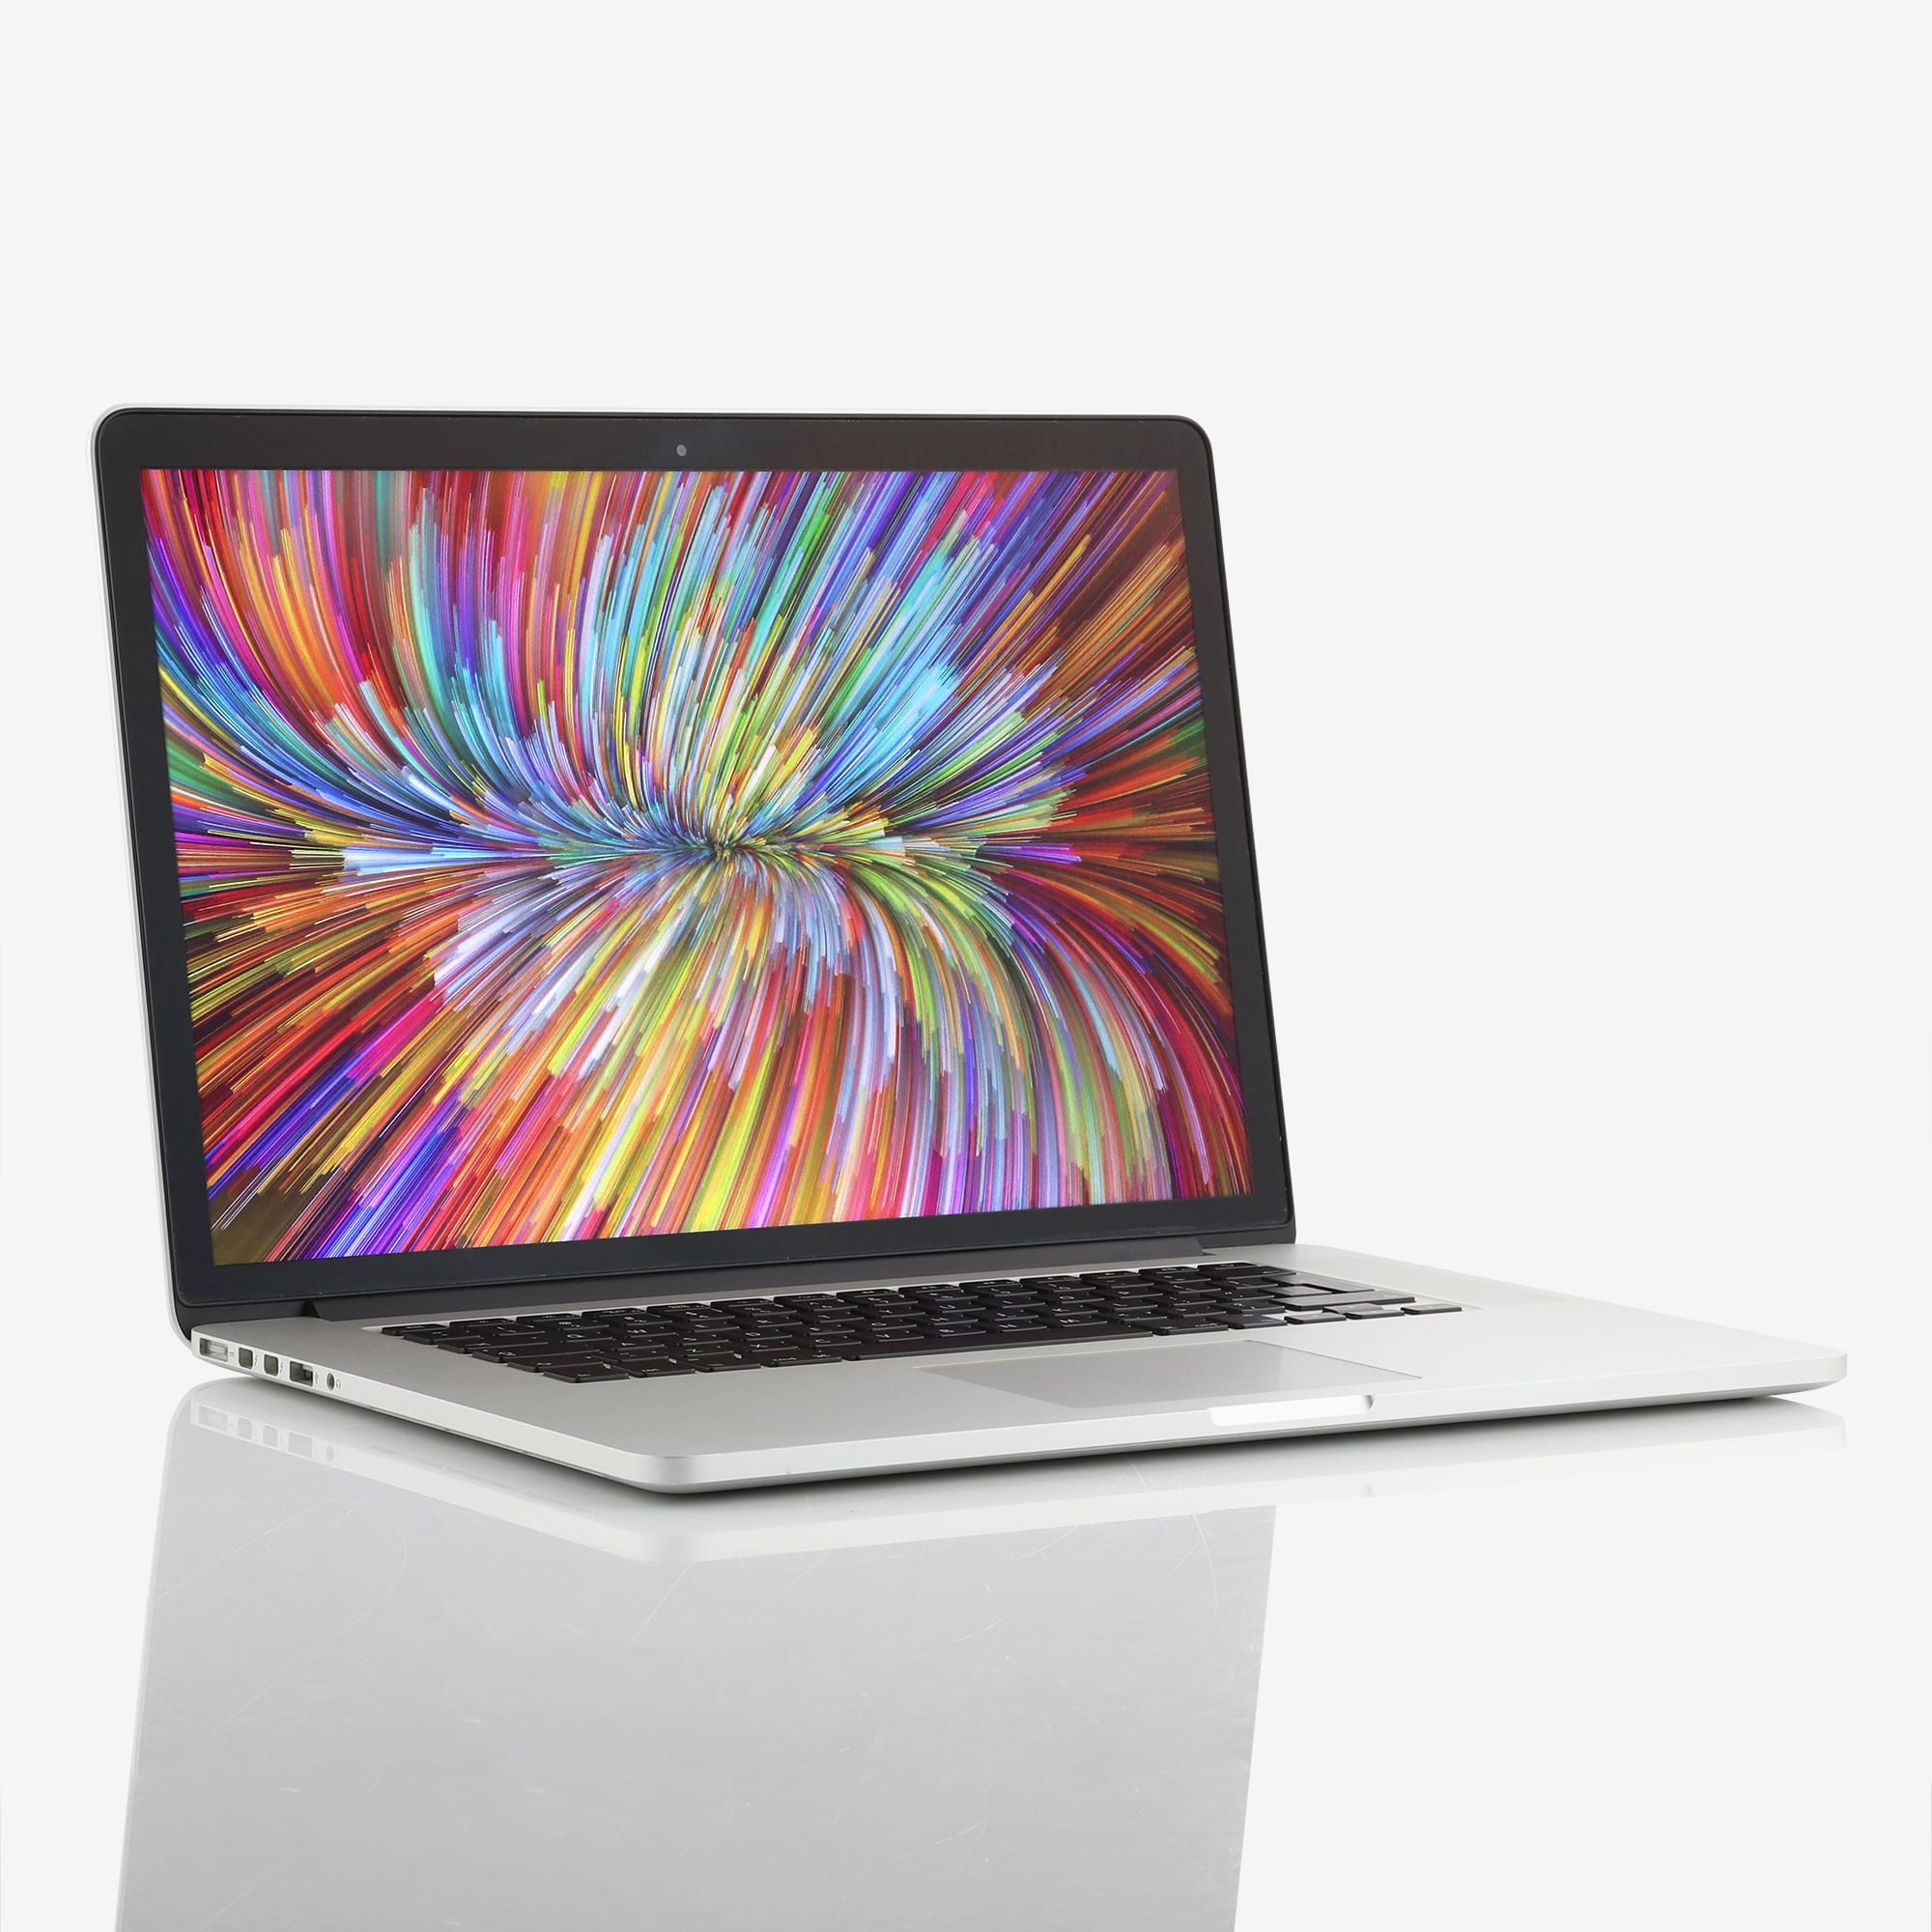 1 x Apple MacBook Pro Retina 15 Inch Quad-Core i7 2.50 GHz (2015)